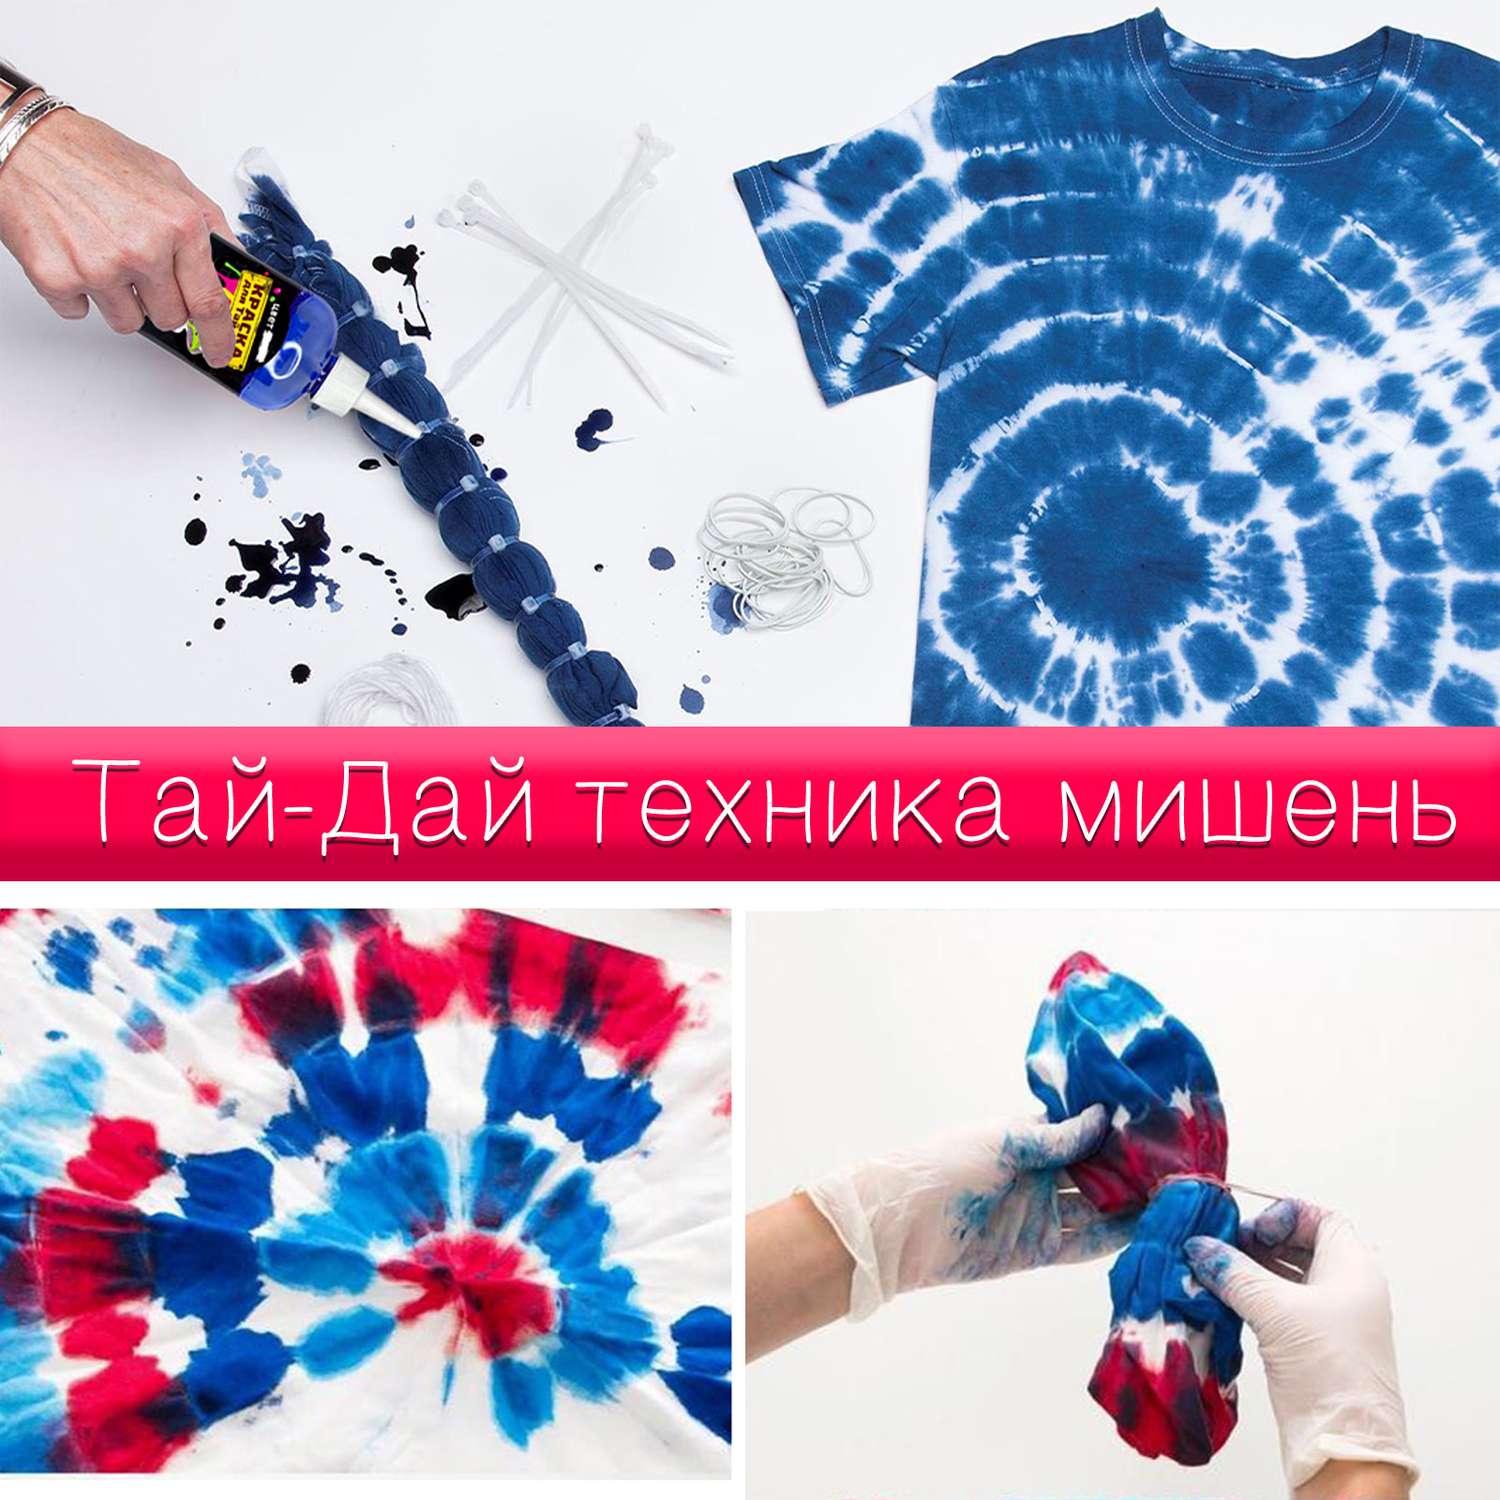 Набор для творчества MINI-TOYS Тай-Дай окрашивание одежды DIY«Макси бокс»/Краски для ткани 6 цветов set №1 + Футболка М - фото 10